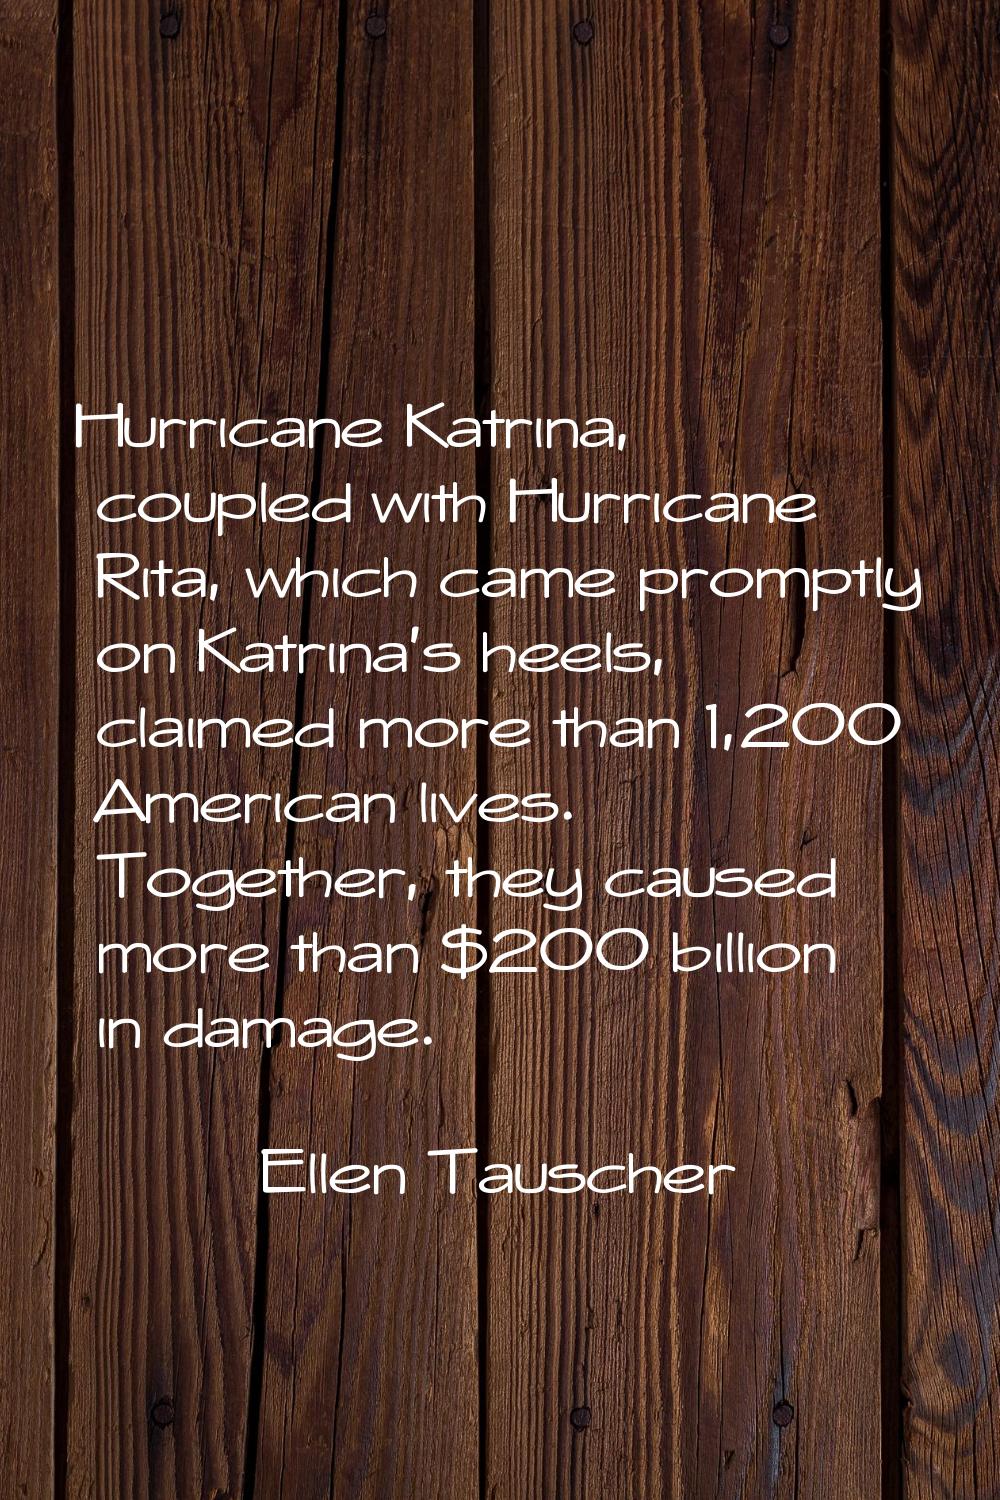 Hurricane Katrina, coupled with Hurricane Rita, which came promptly on Katrina's heels, claimed mor